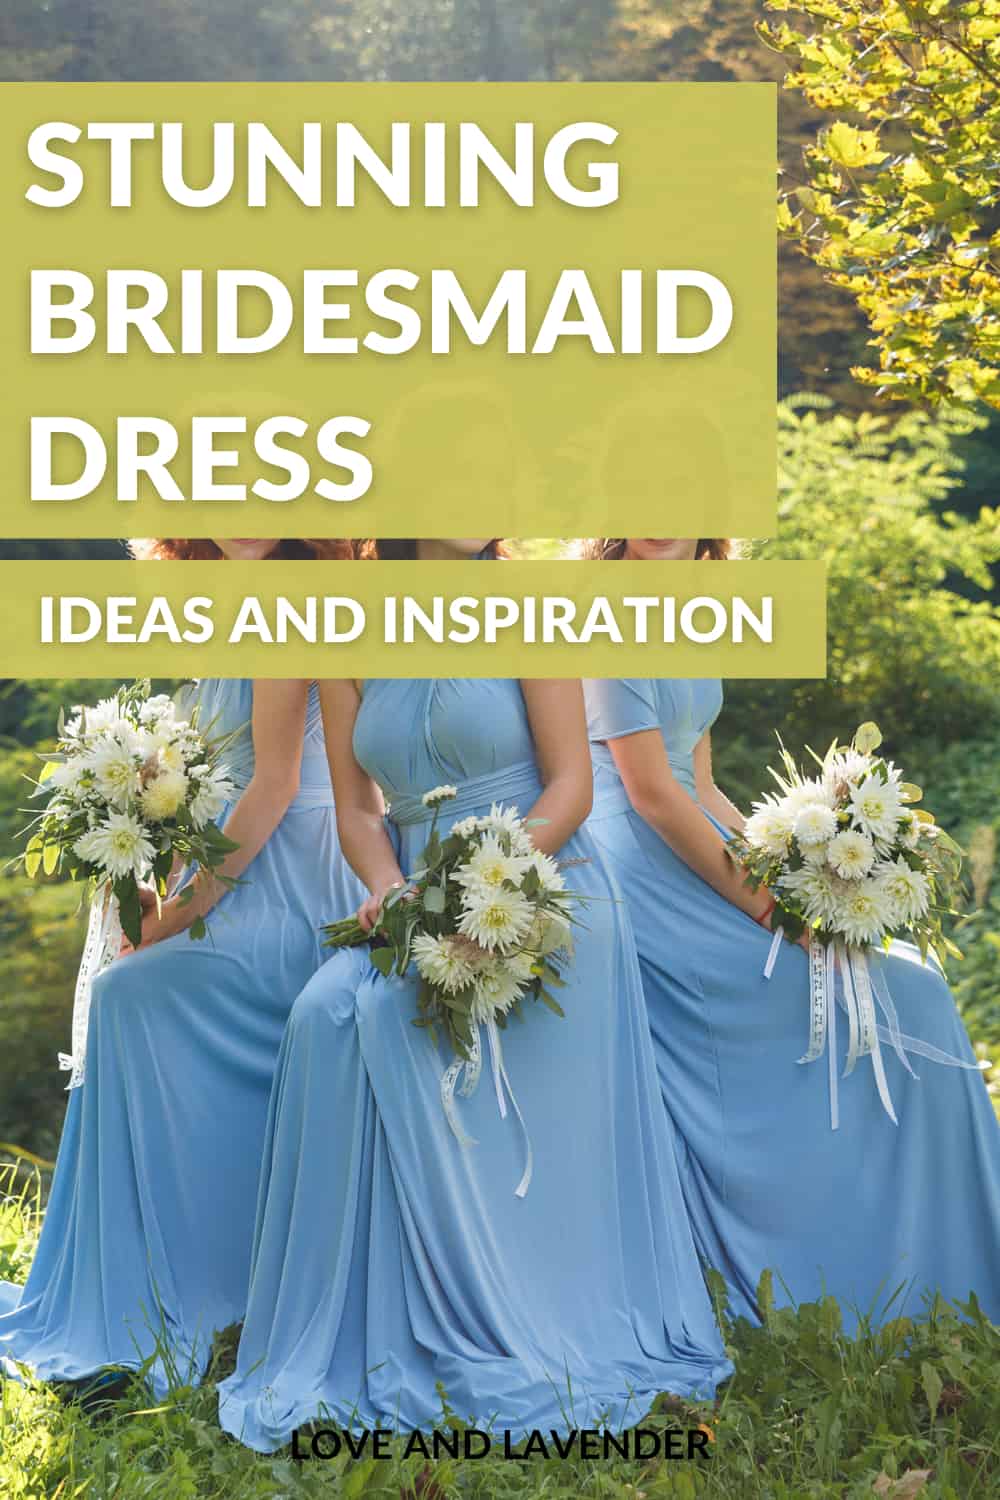 Pinterest pin - 5 Bridesmaid Attire Inspirational Ideas